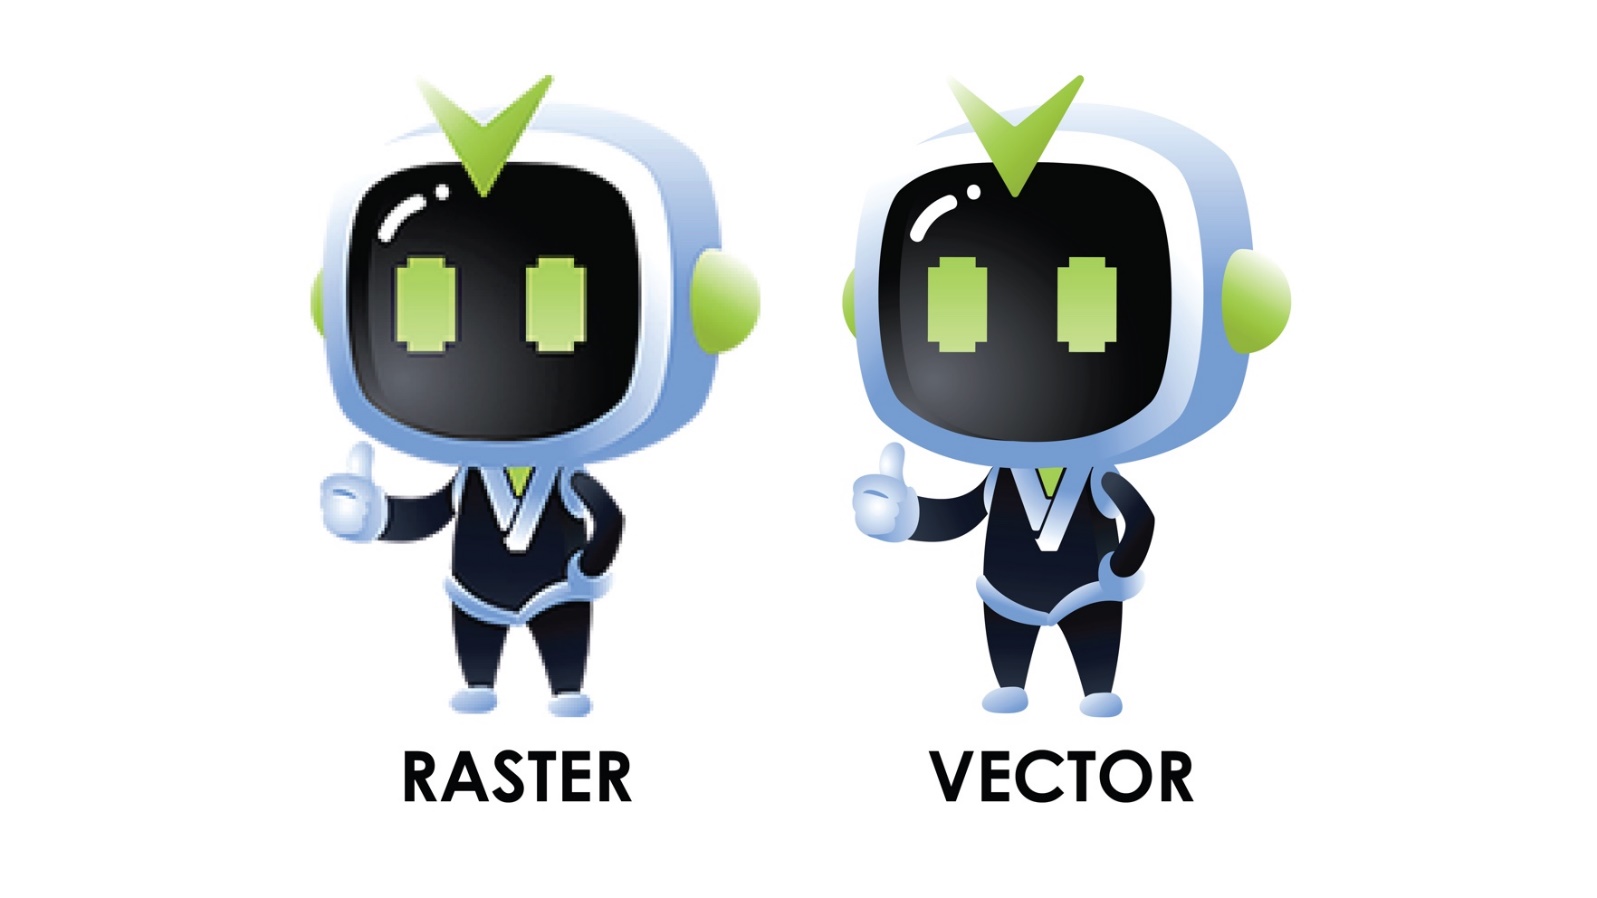 Vector graphics vs bitmapped graphics